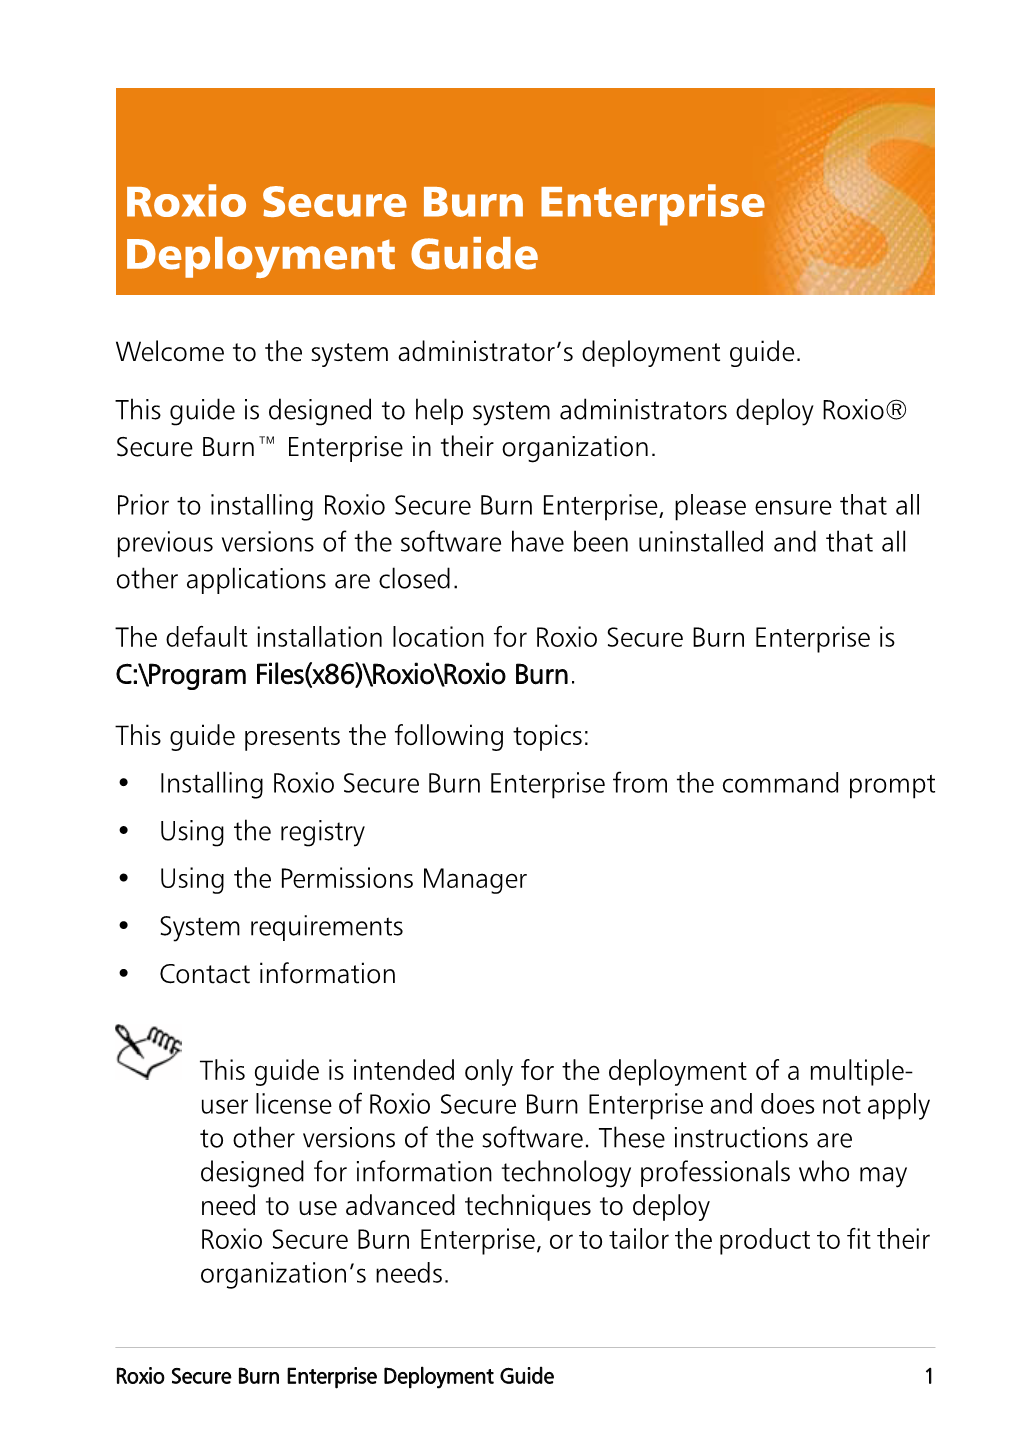 Roxio Secure Burn Enterprise Deployment Guide